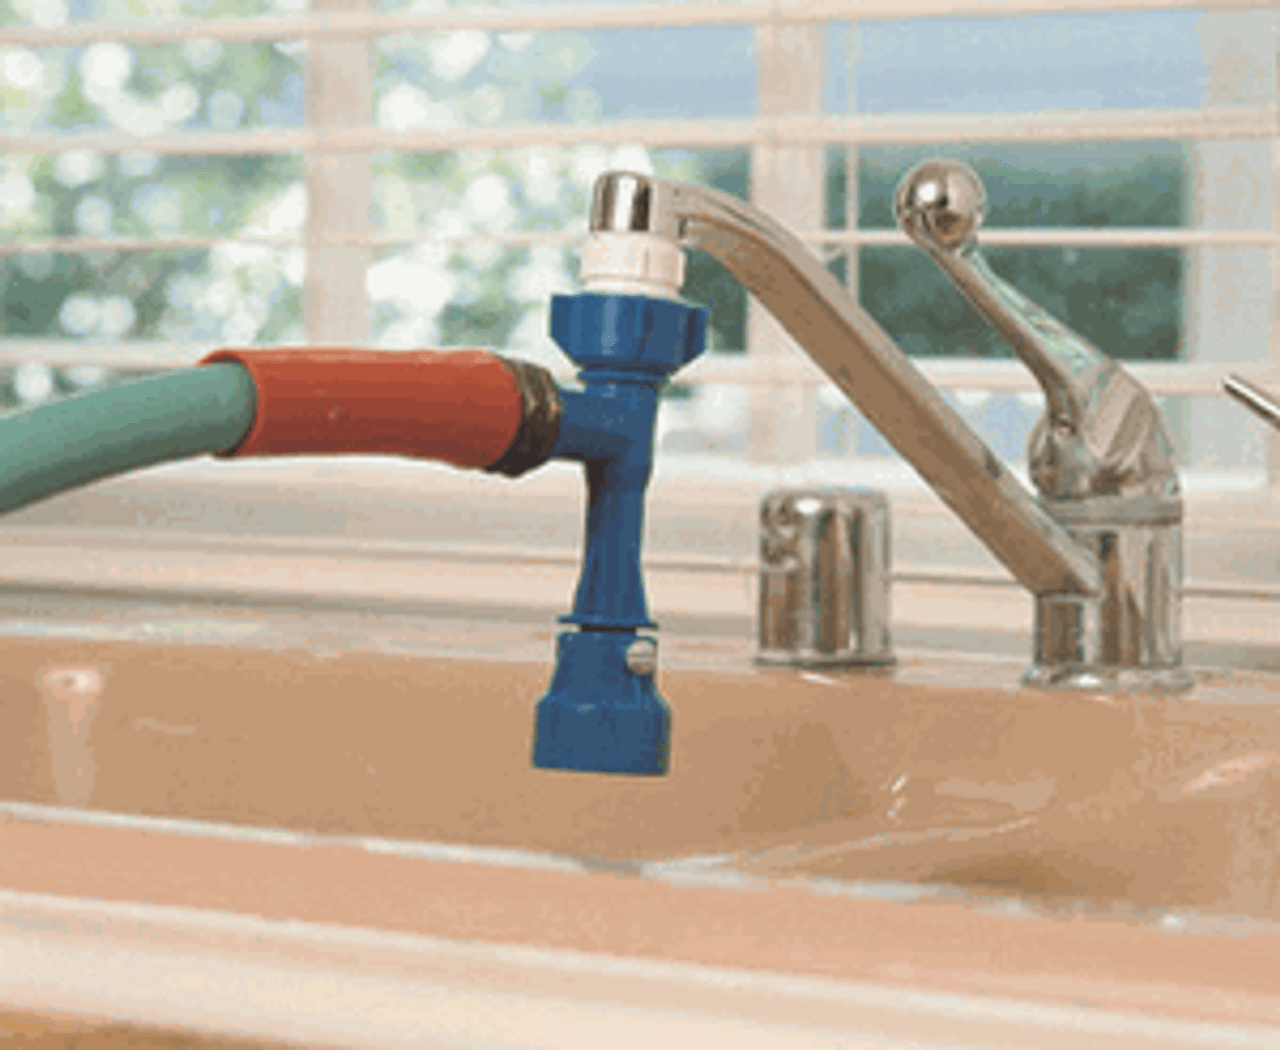 adapter from kitchen sink to garden hose